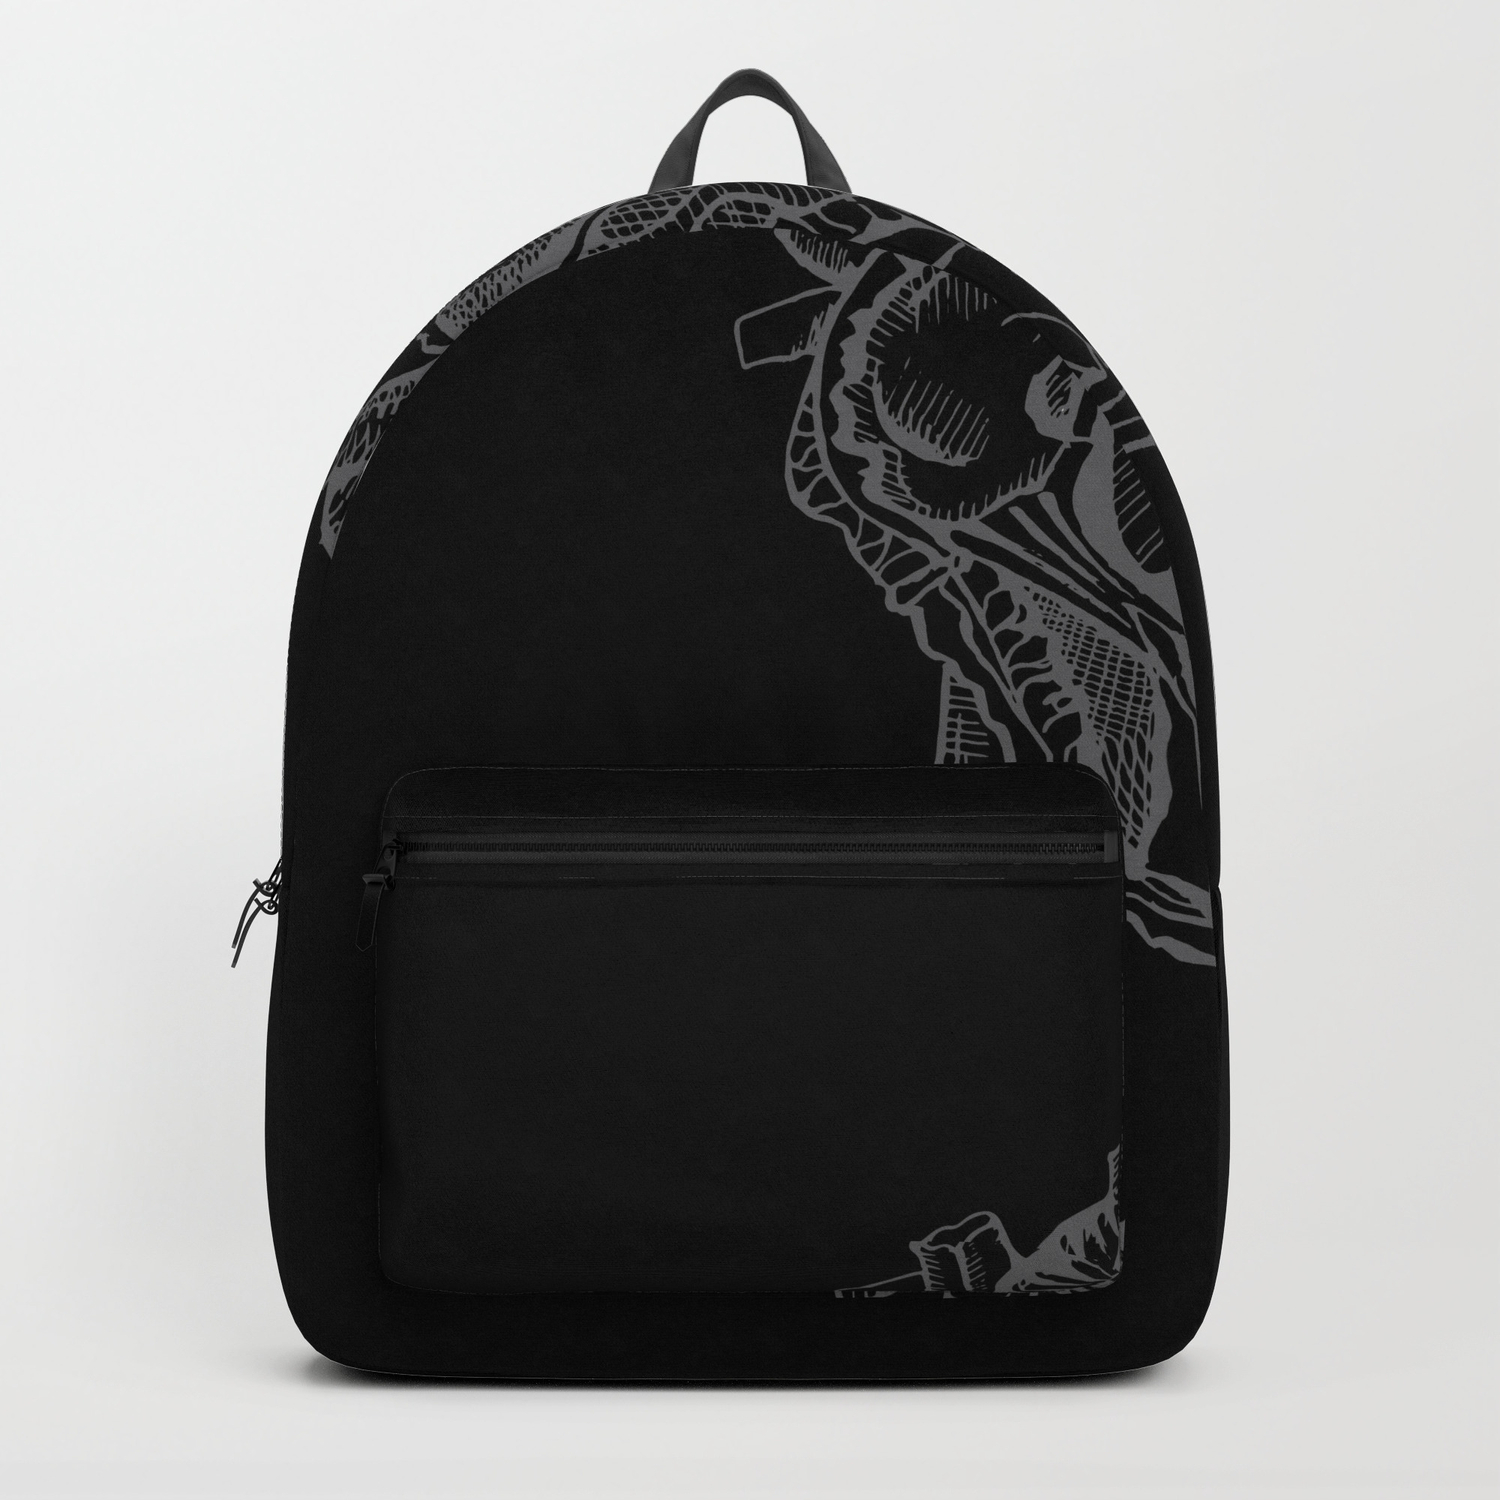 Black Chrome Heart Backpack